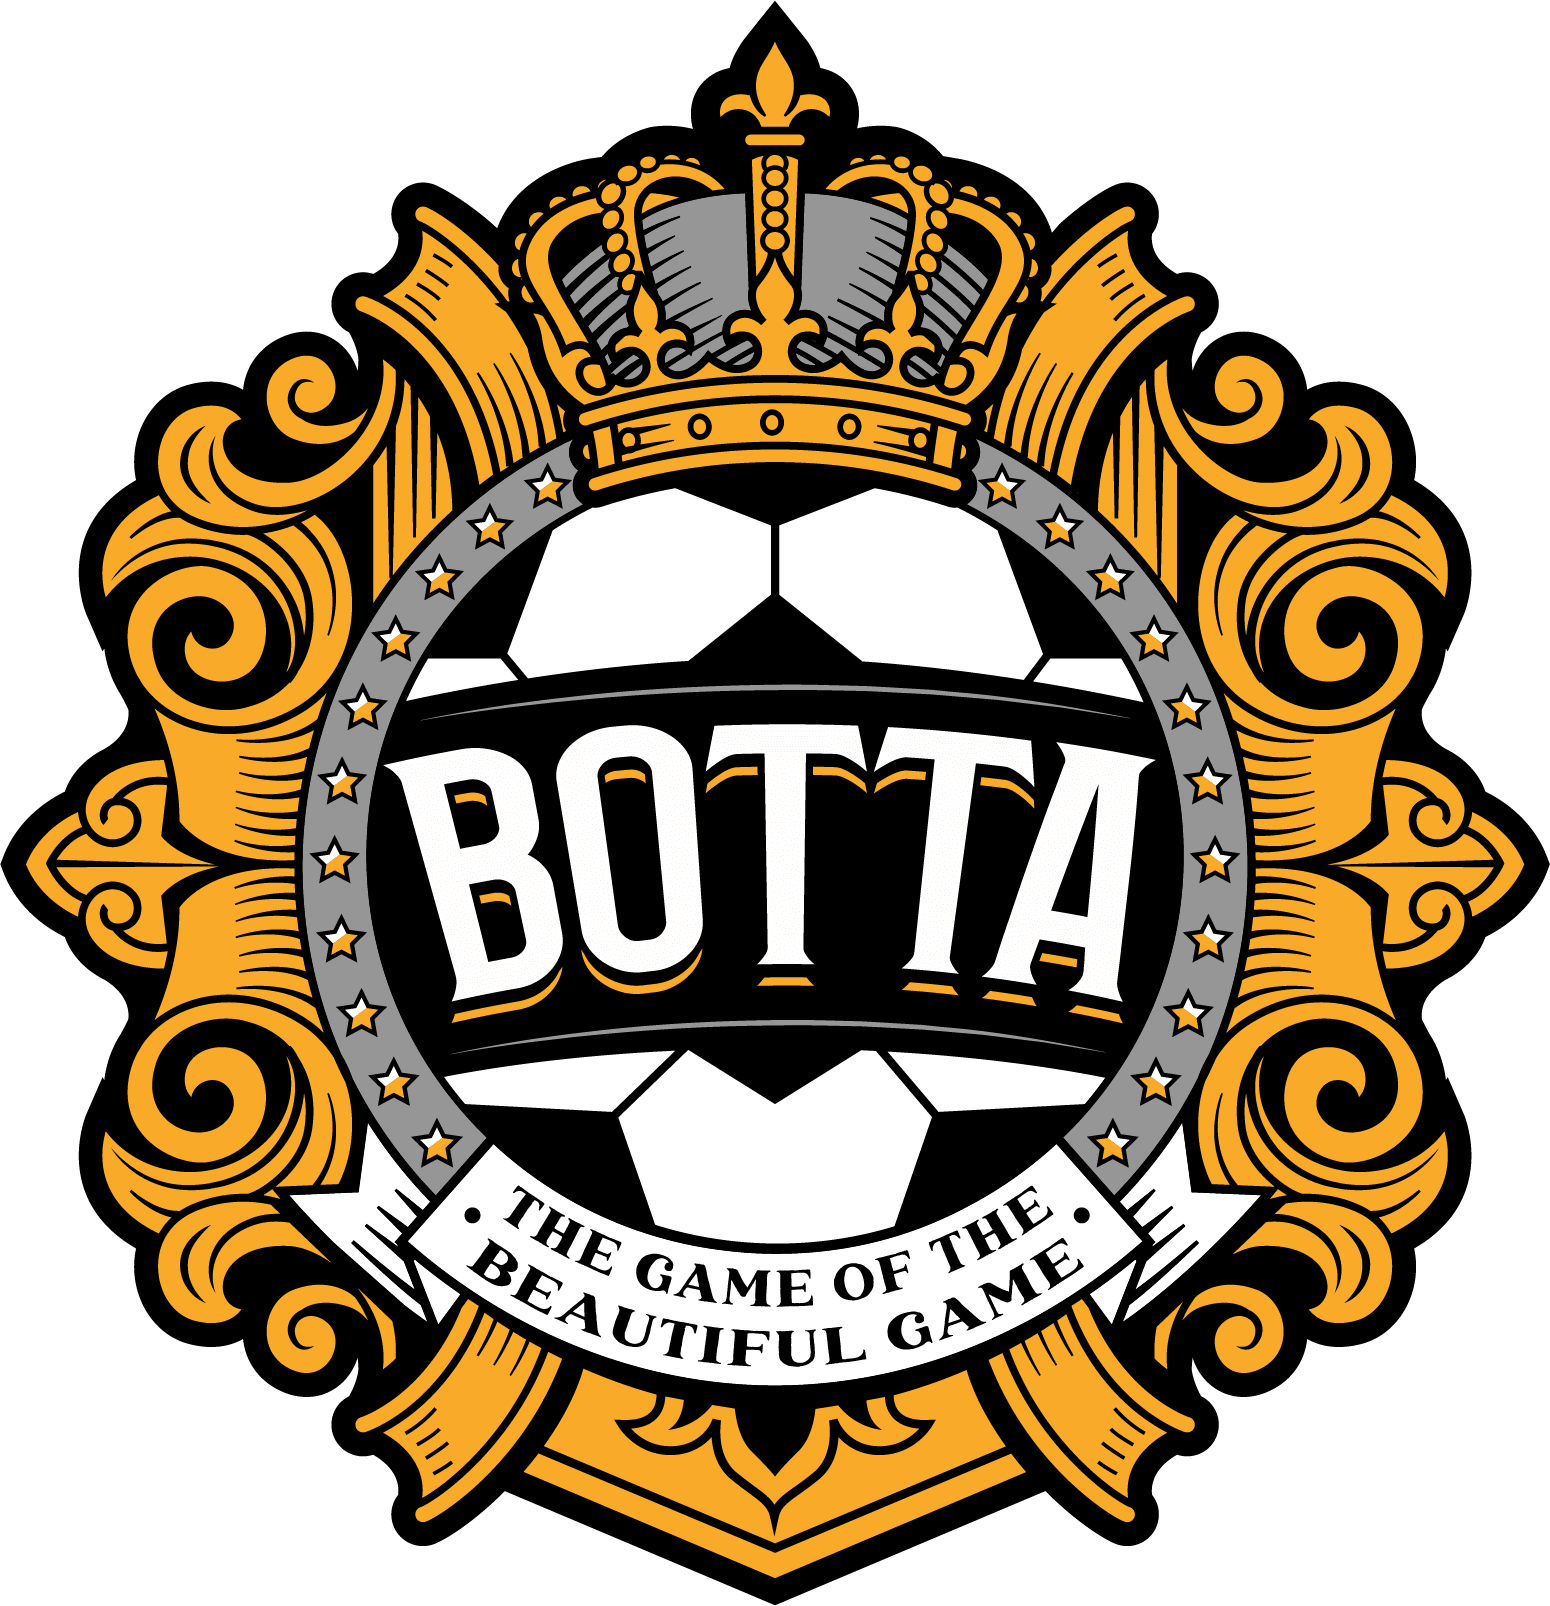 Logo du jeu de la Botta